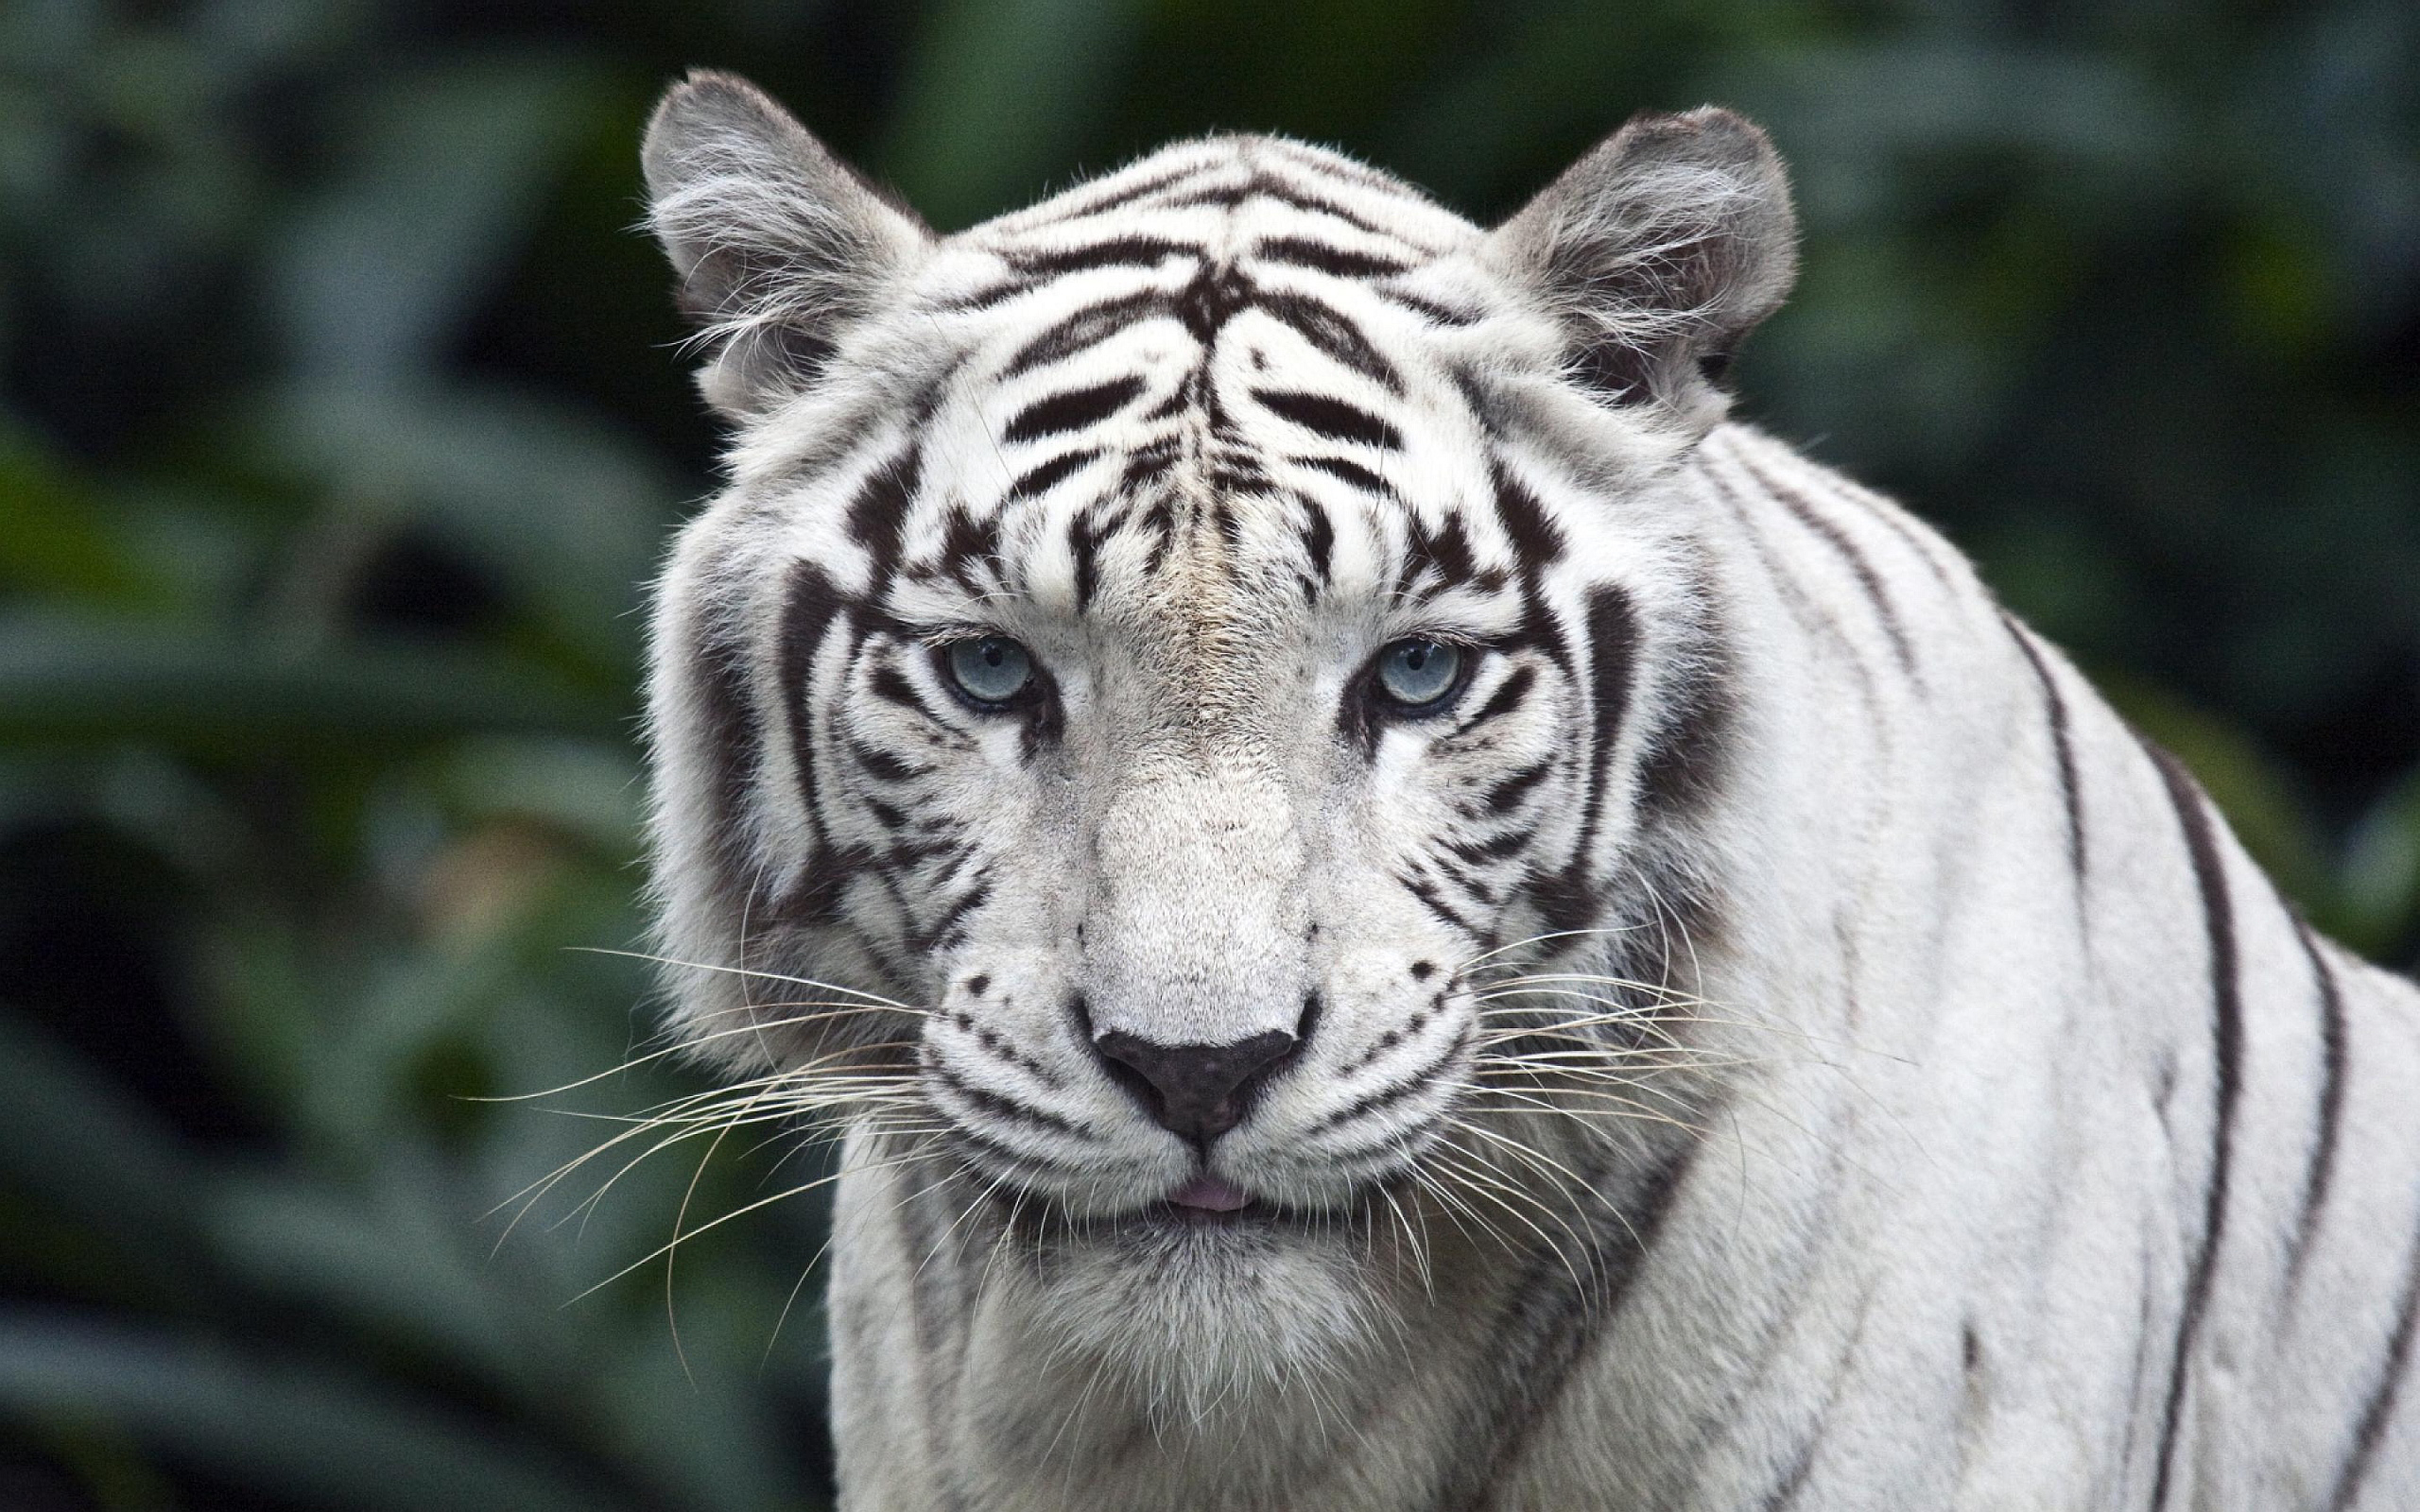 White Tiger Background